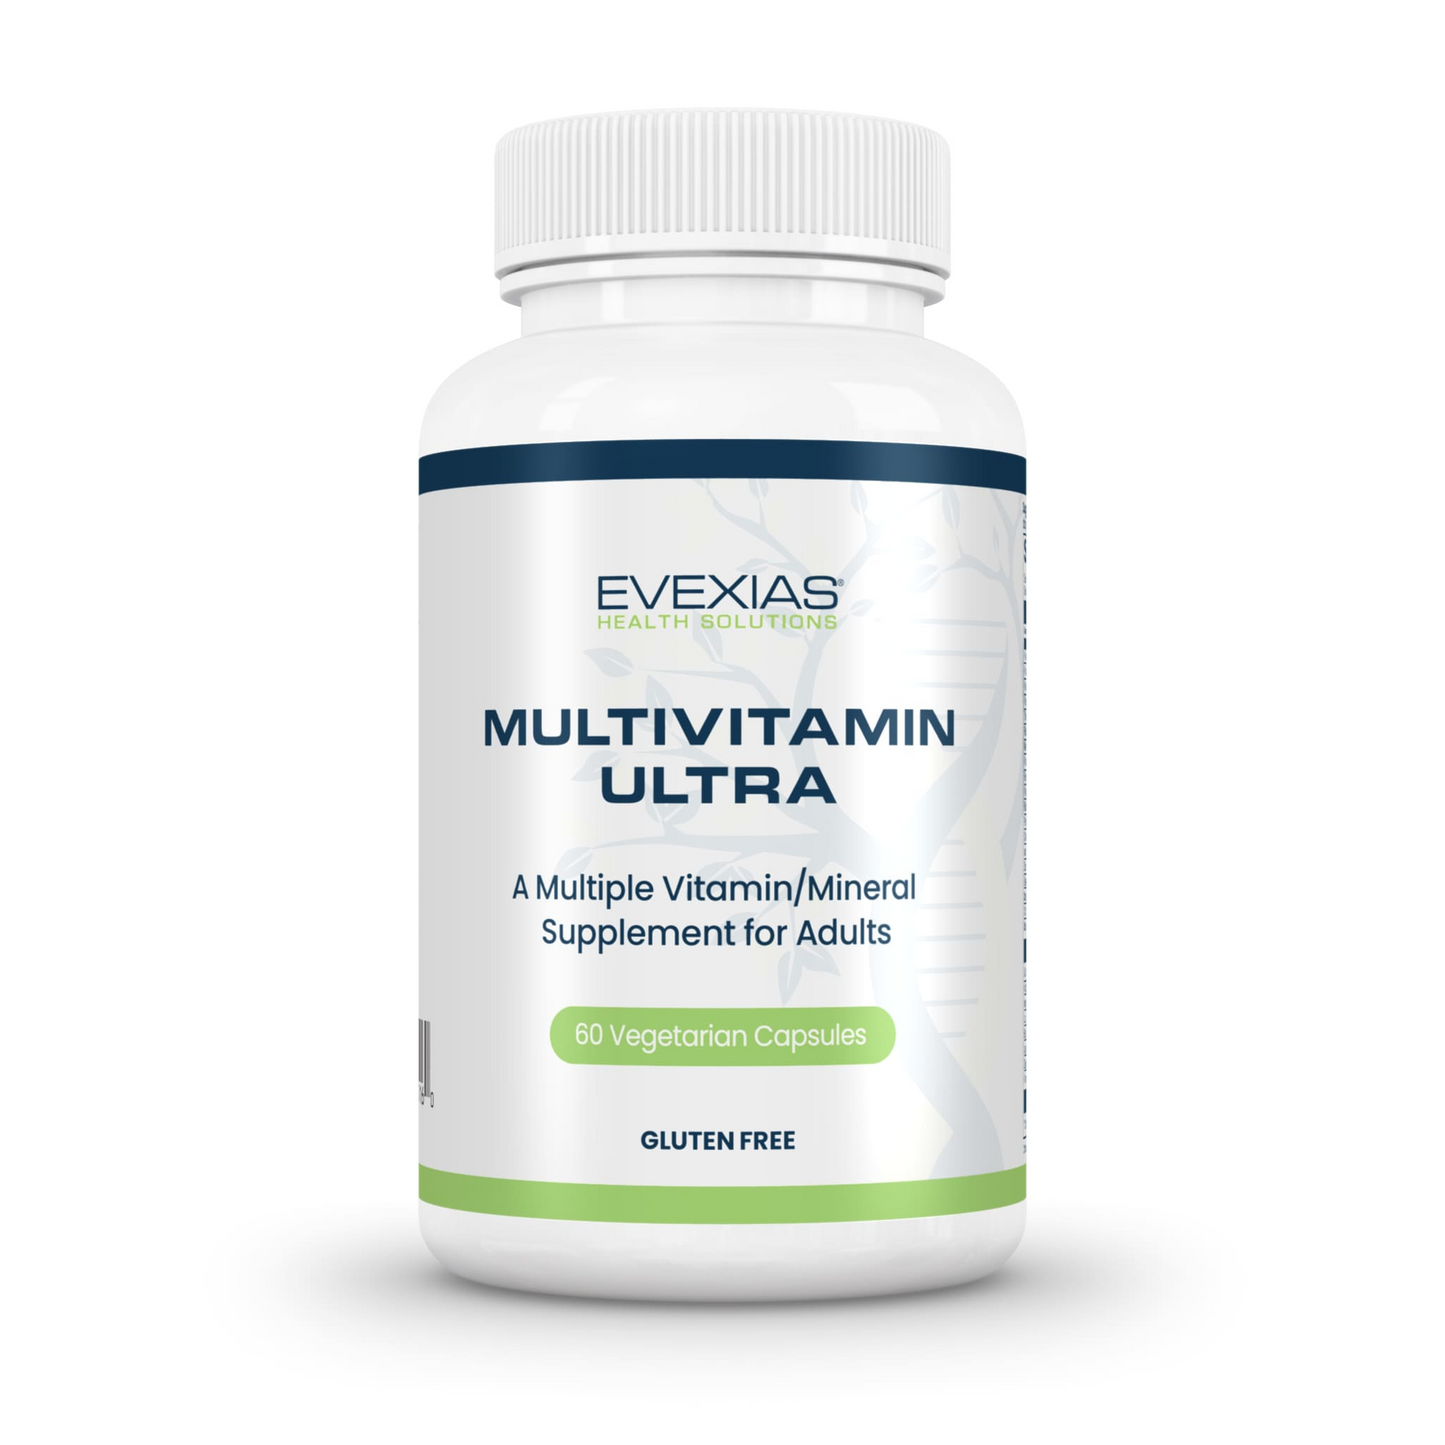 Multivitamin Ultra Evexias front